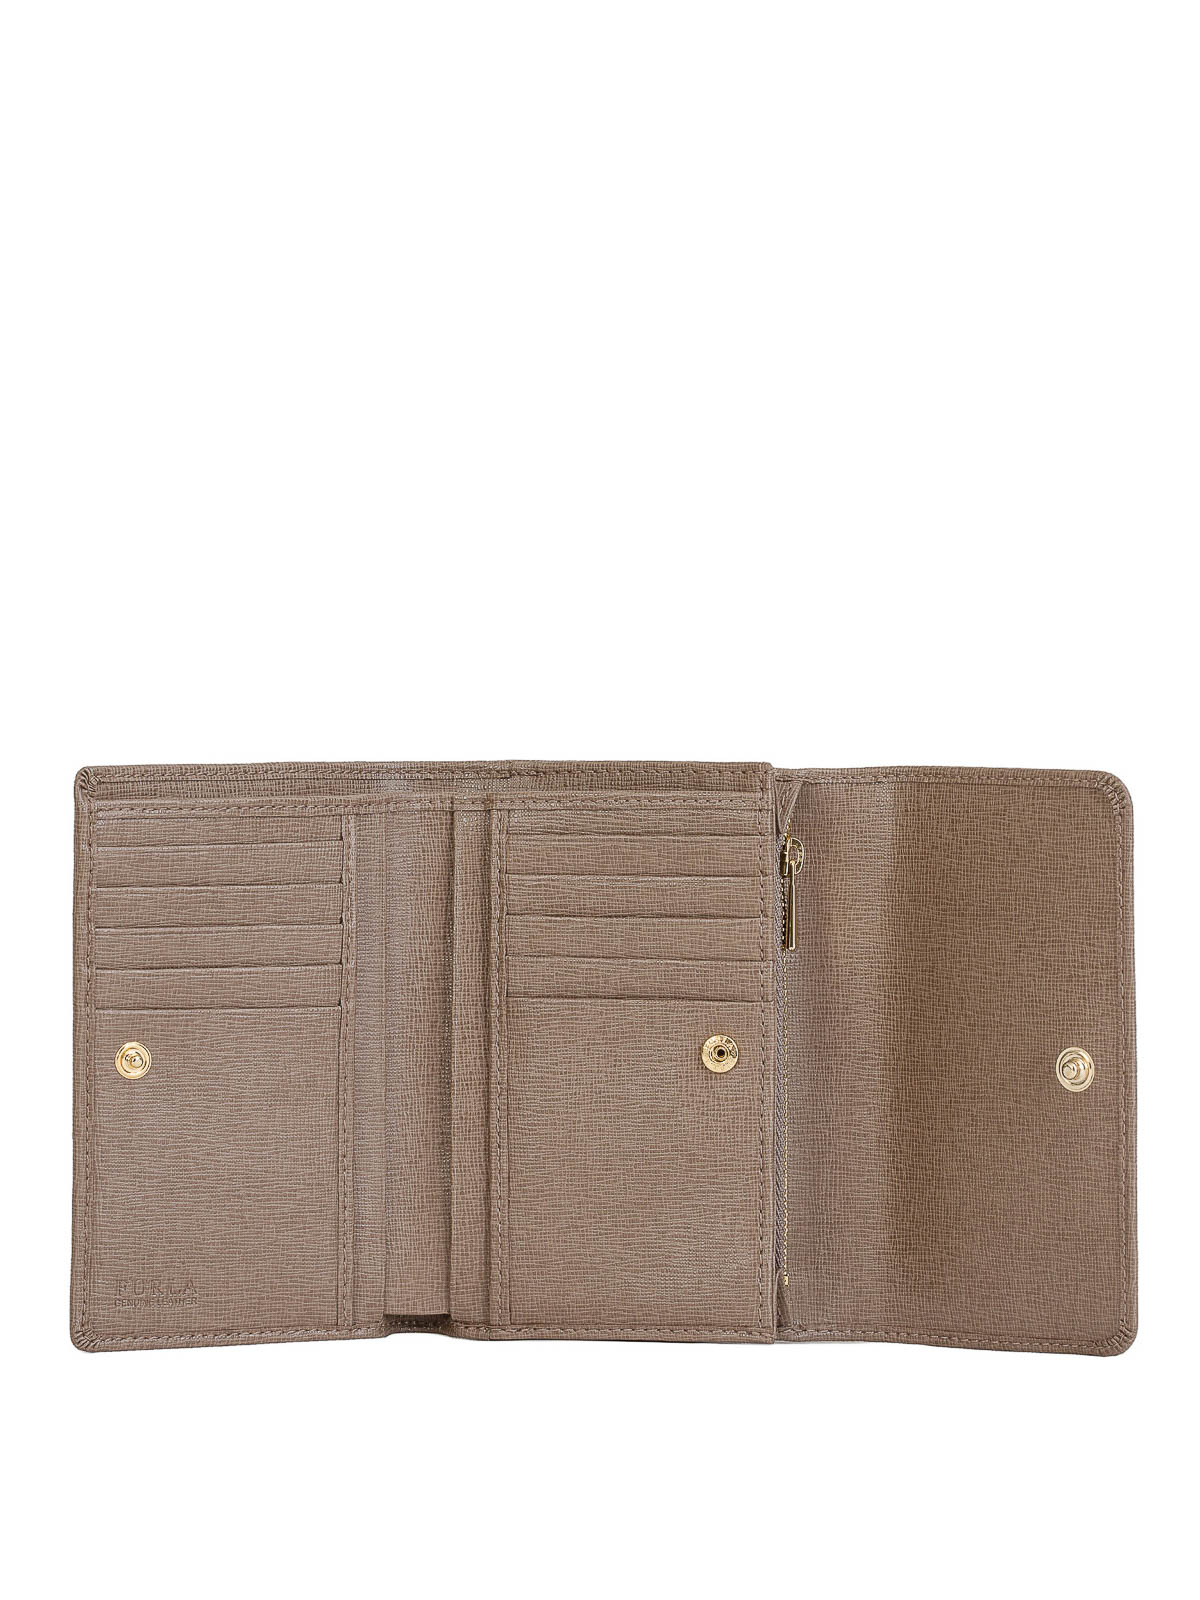 Wallets & purses Furla - BABYLON TRI-FOLD WALLET - 833677DAINO | iKRIX.com